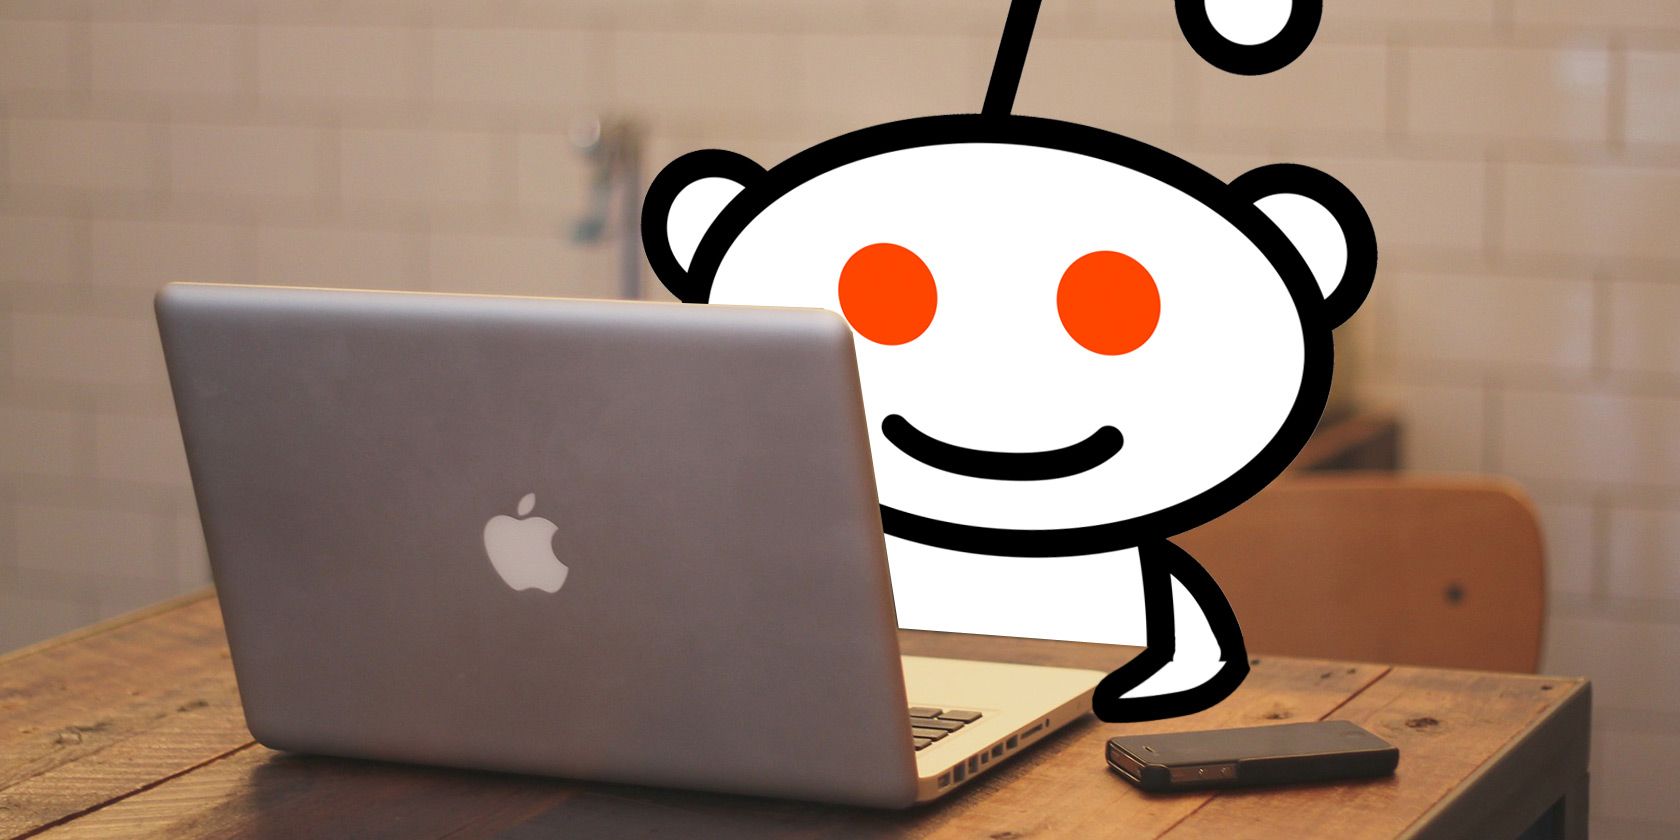 best macbook for programming reddit